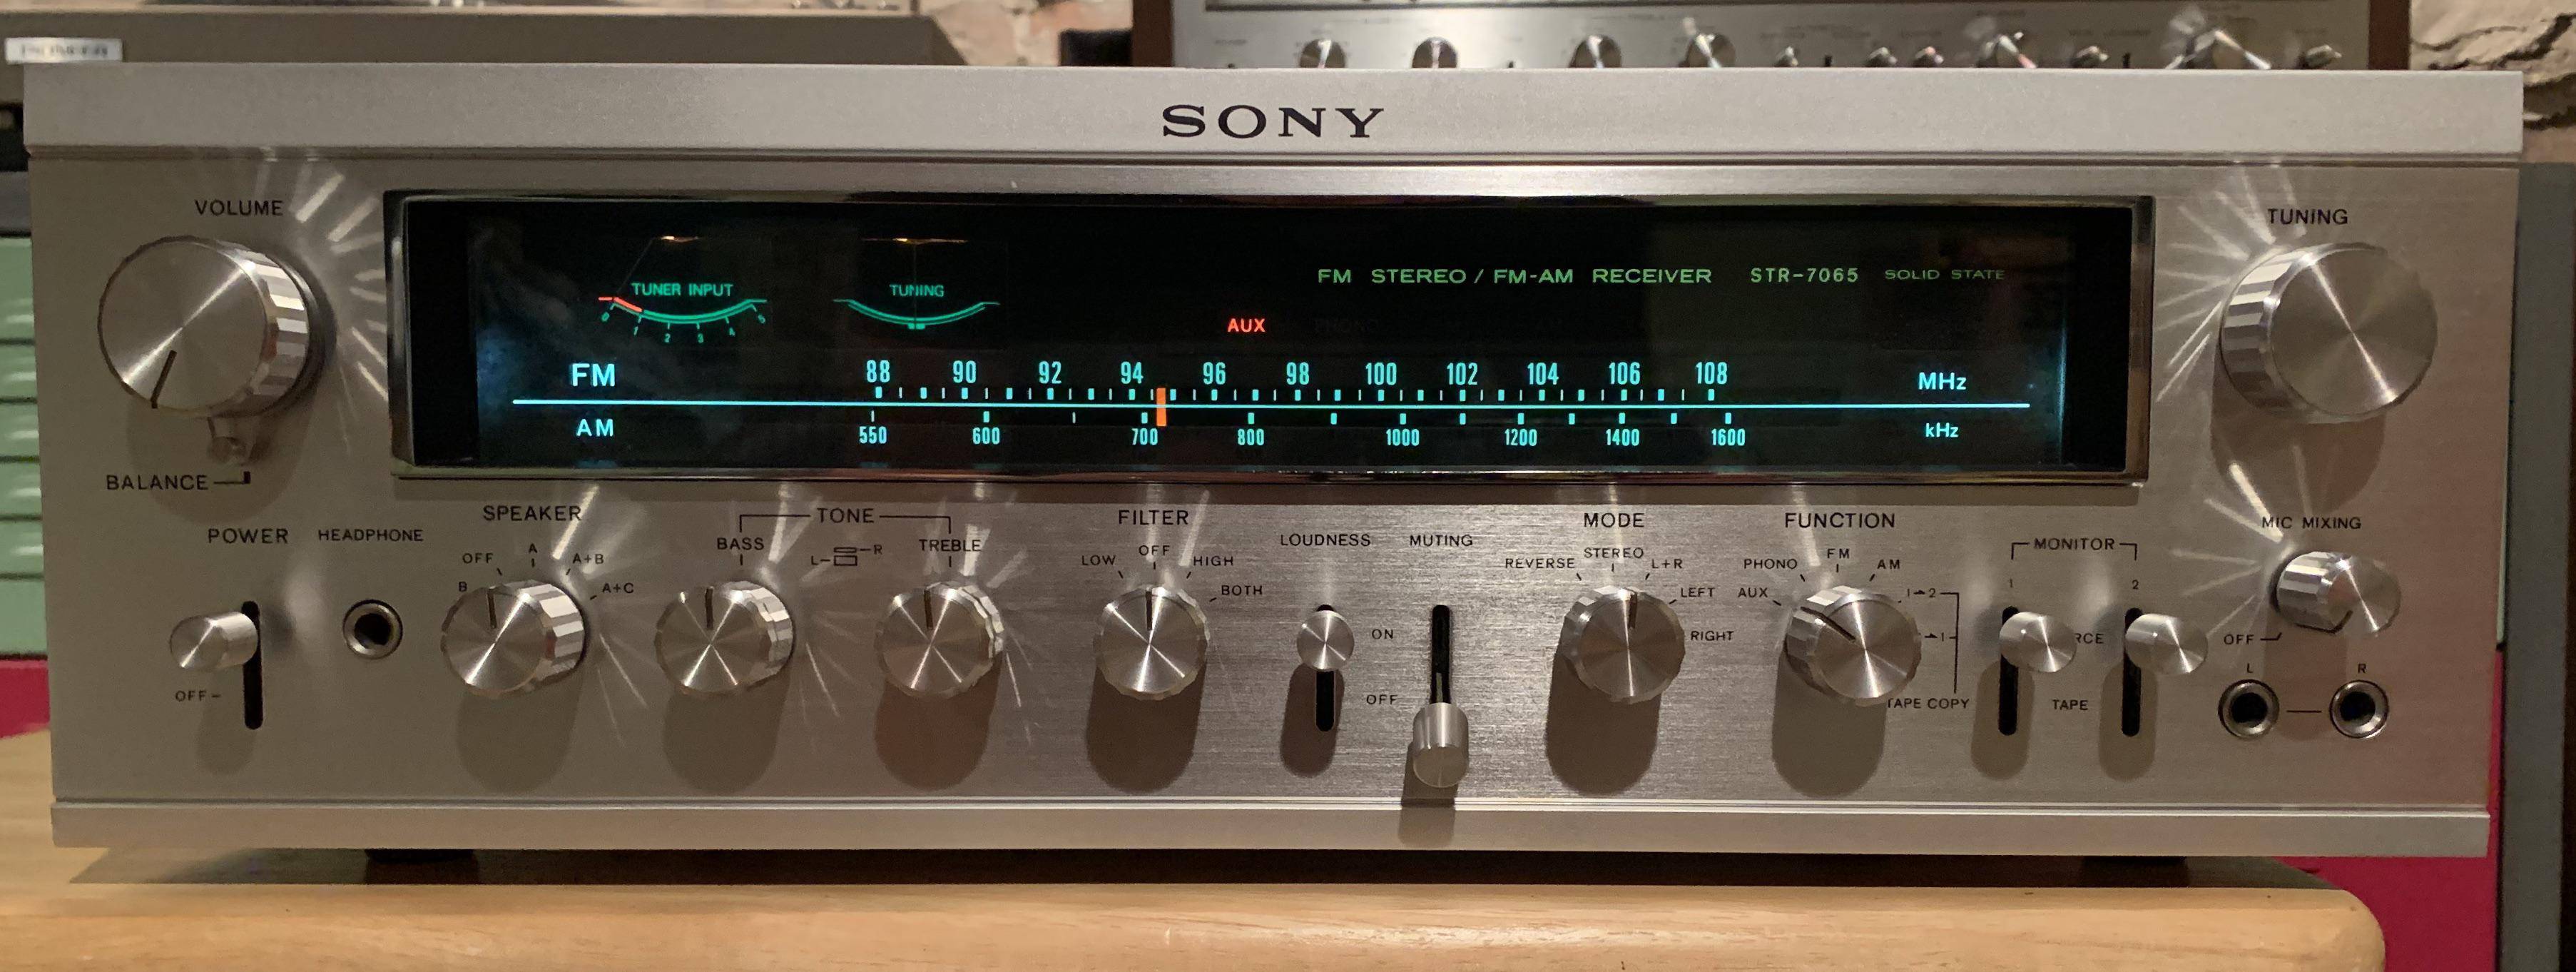 Sony STR-7065